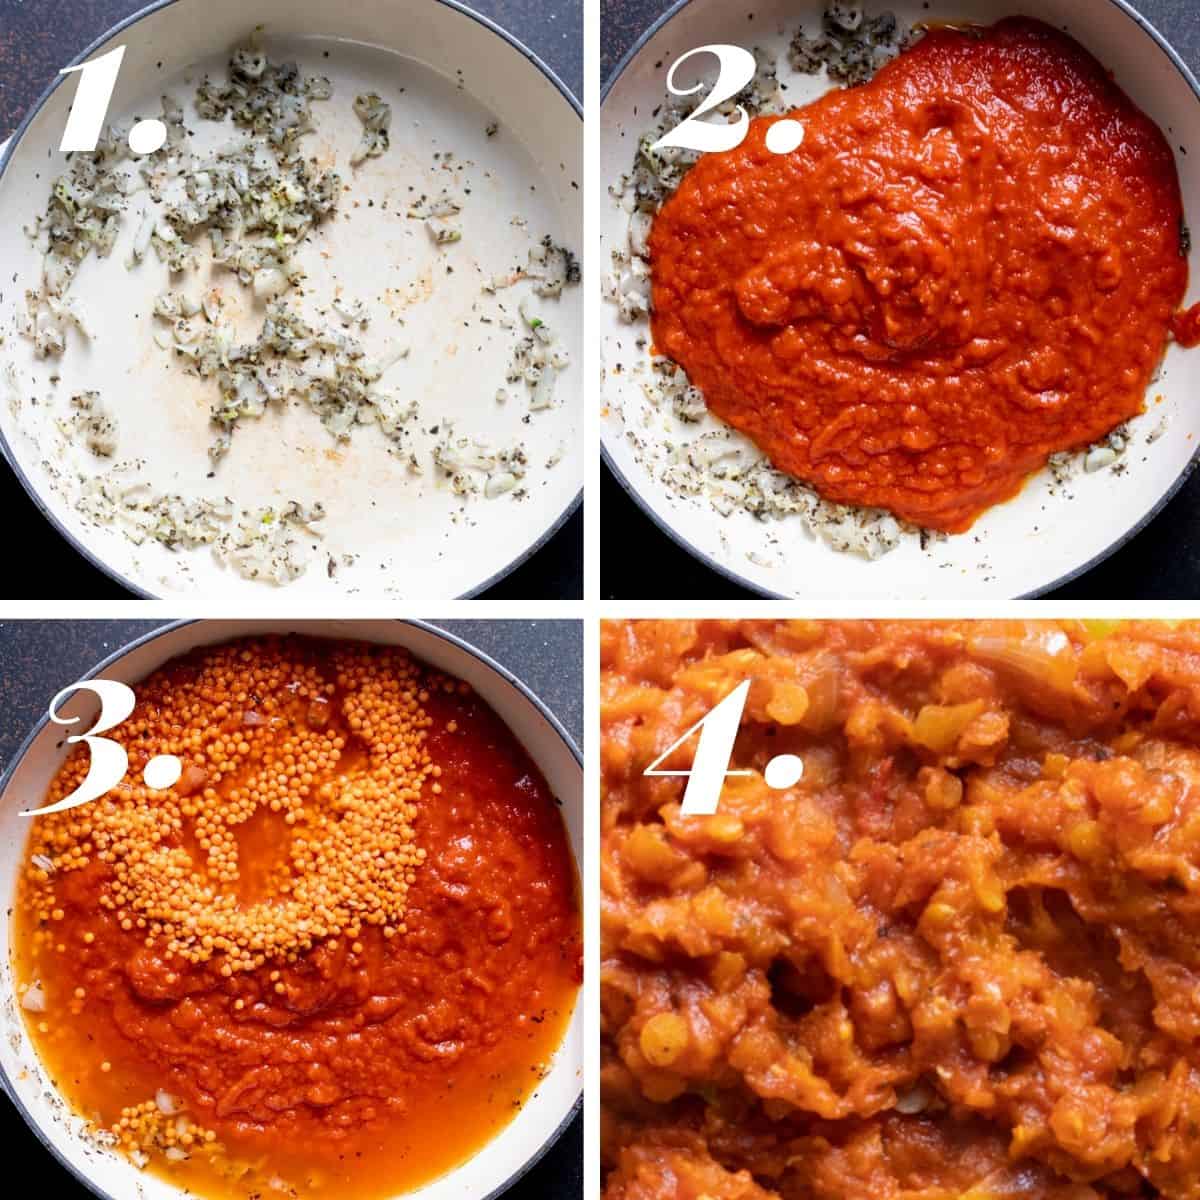 Steps on making the red lentil marinara sauce.